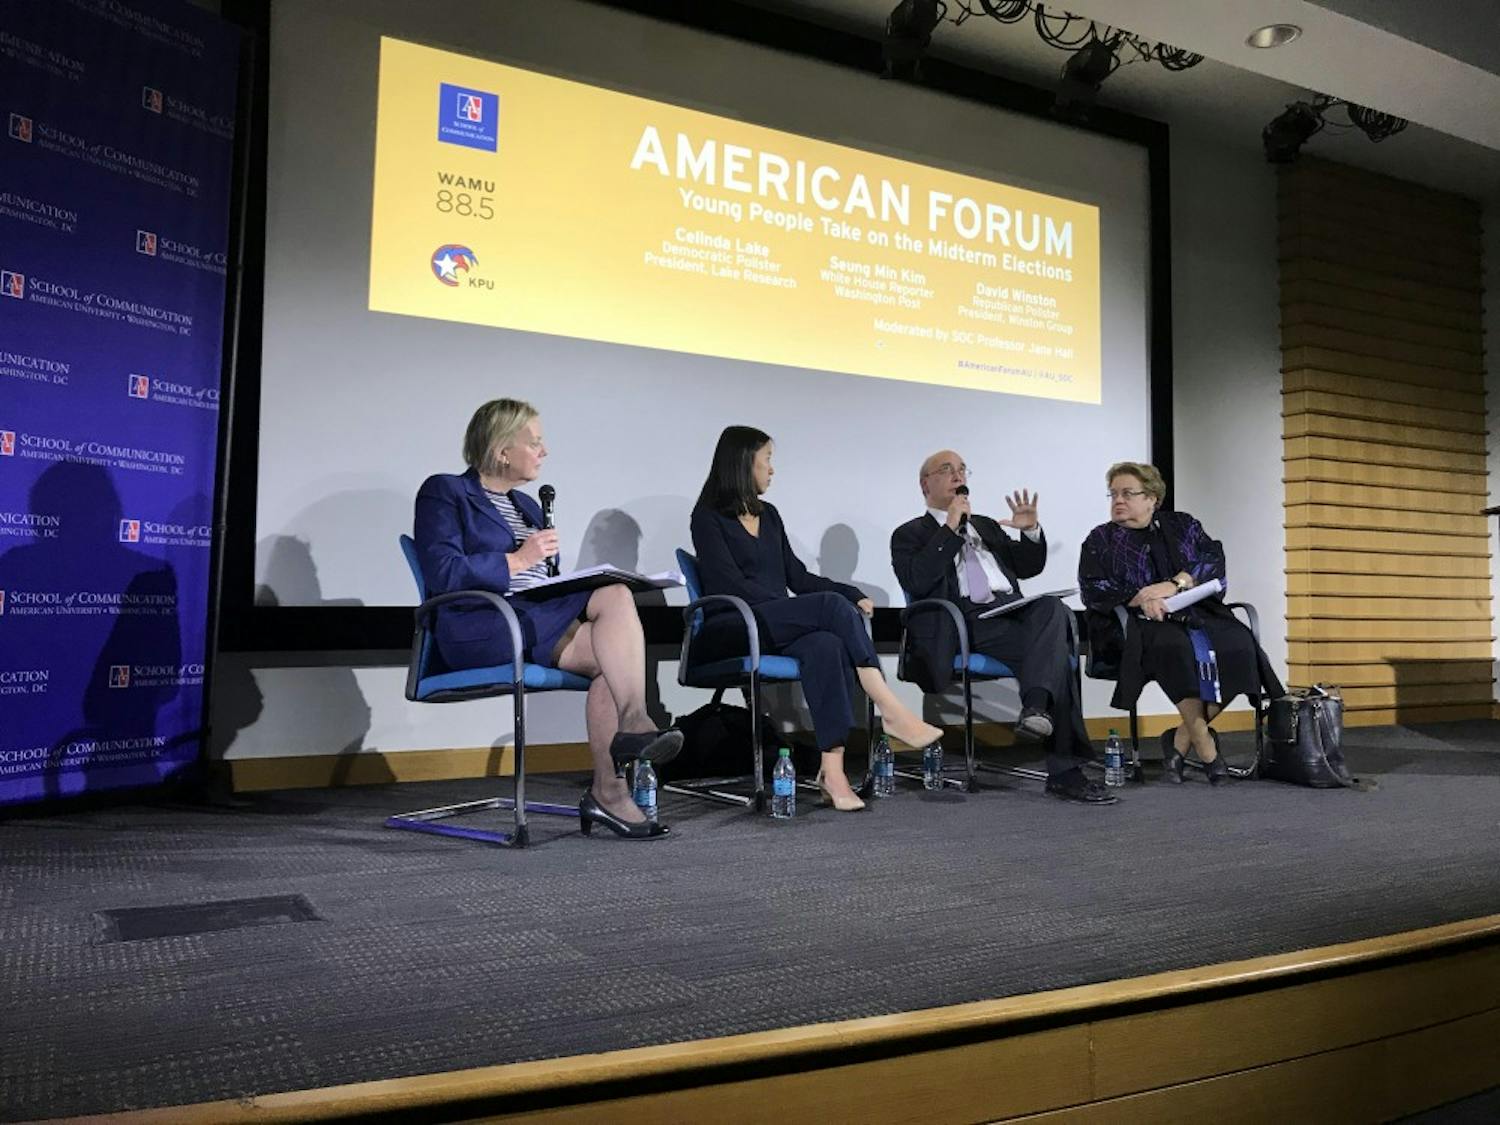 American Forum